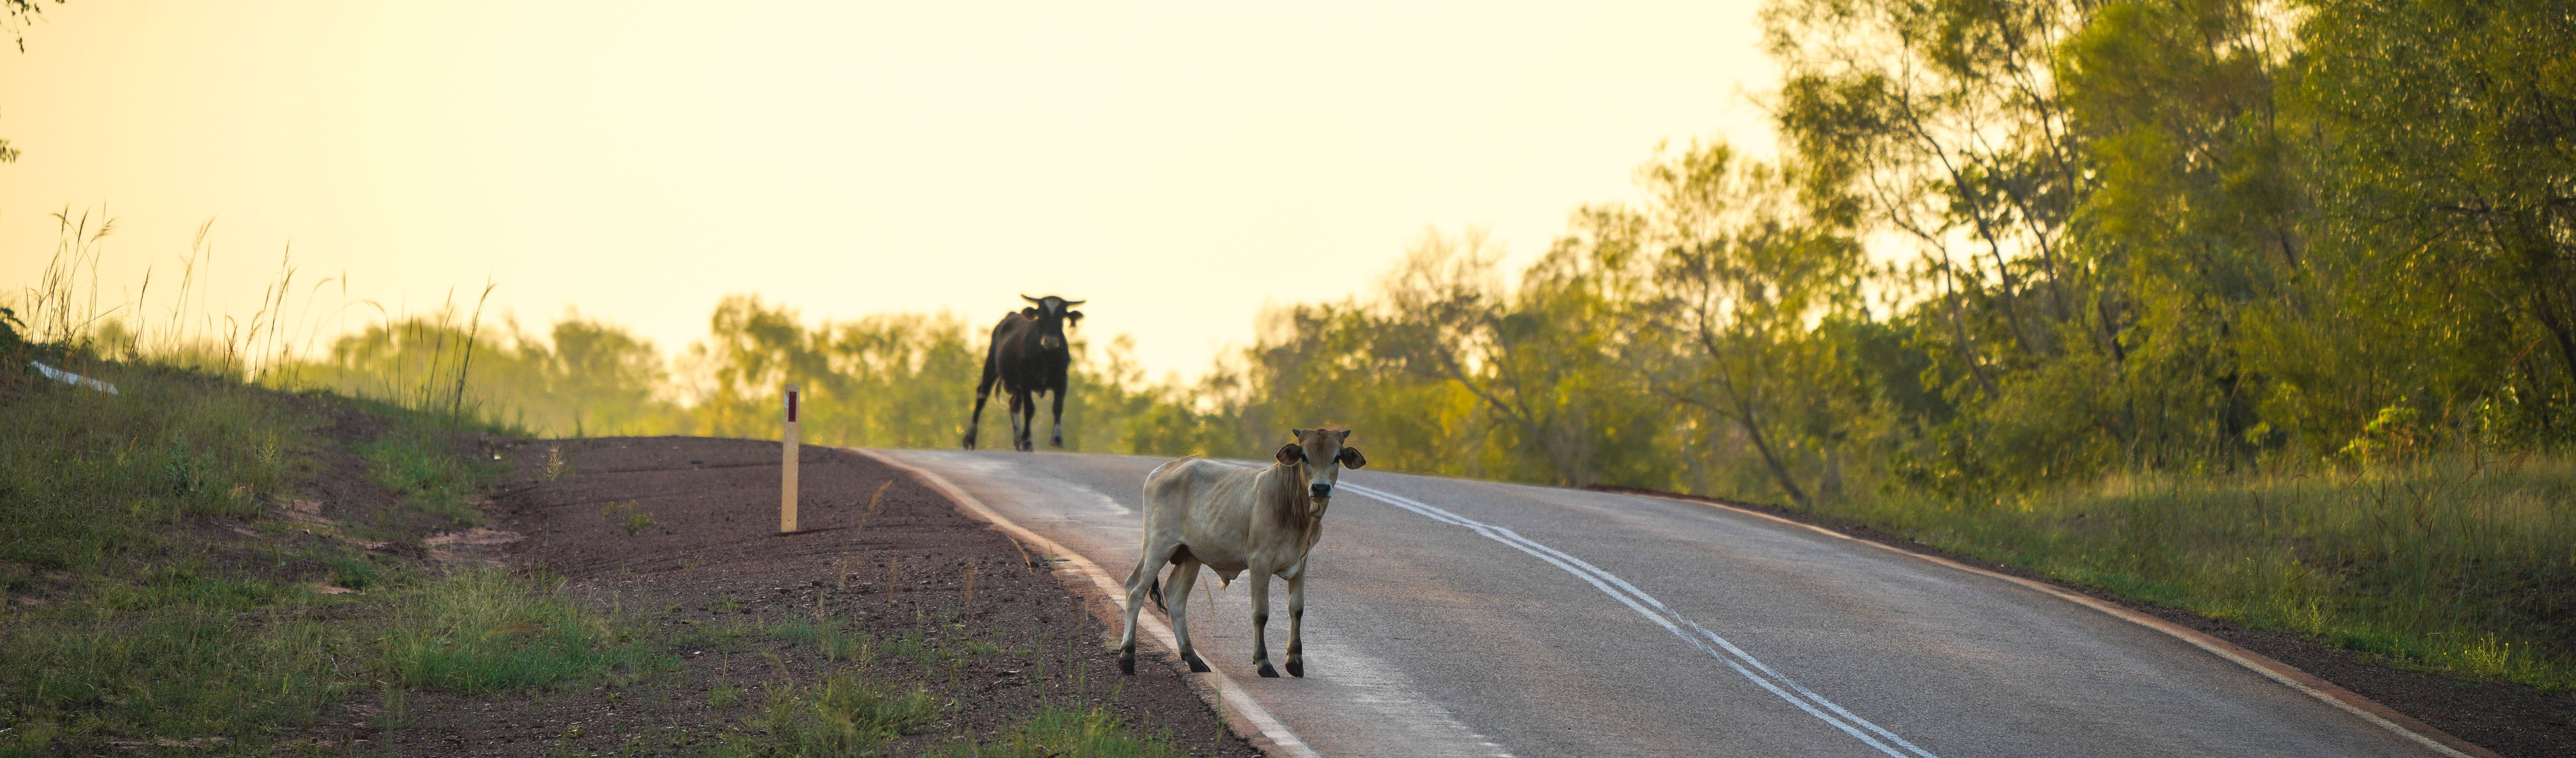 Straying cattle on roads.jpg